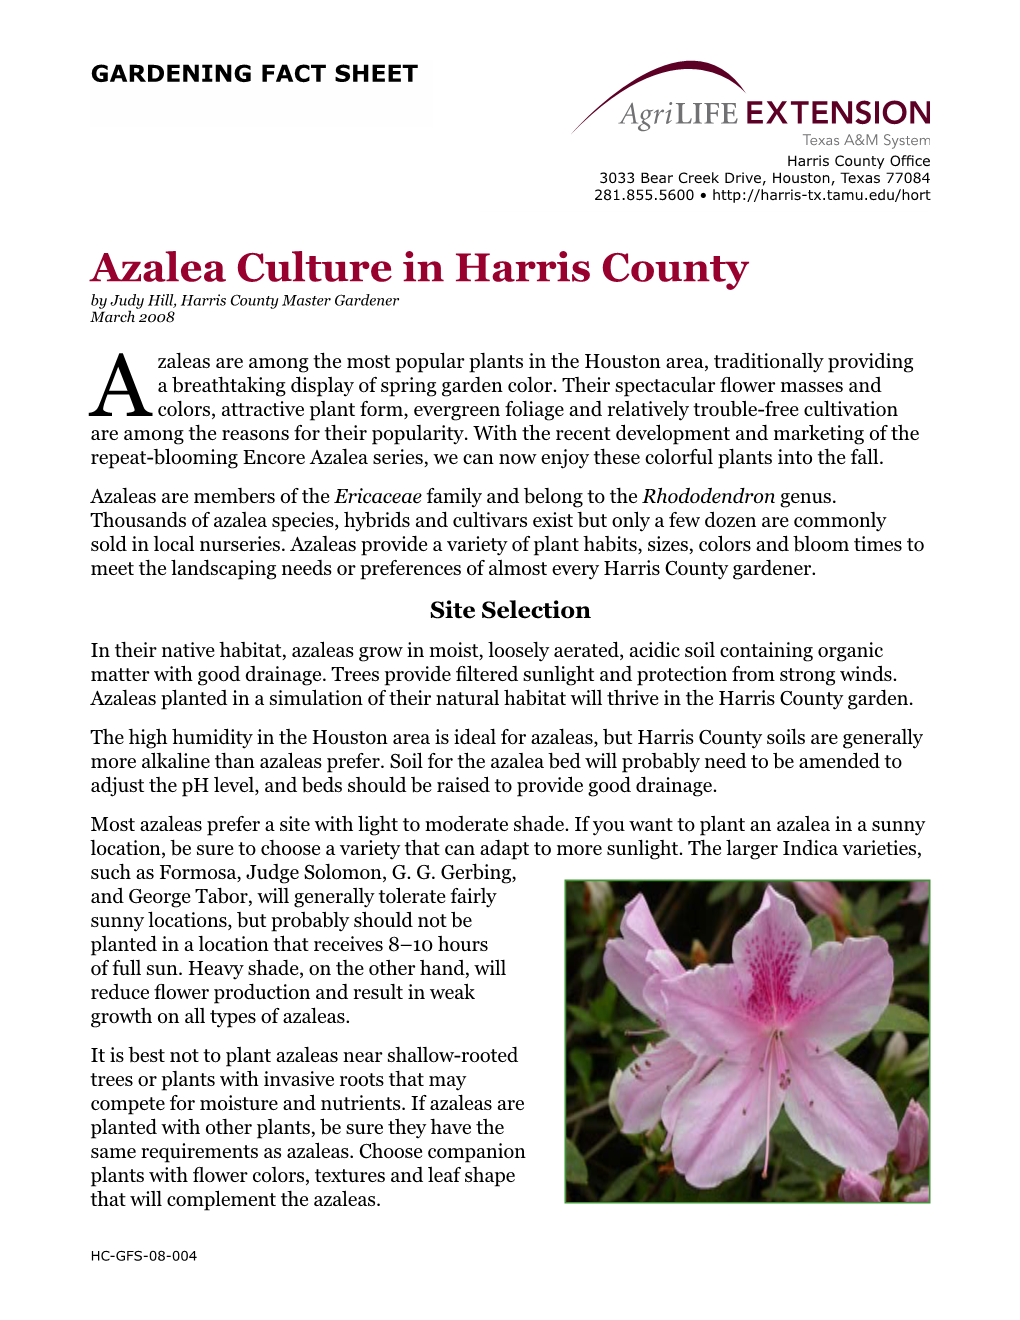 Azalea Culture in Harris County by Judy Hill, Harris County Master Gardener March 2008